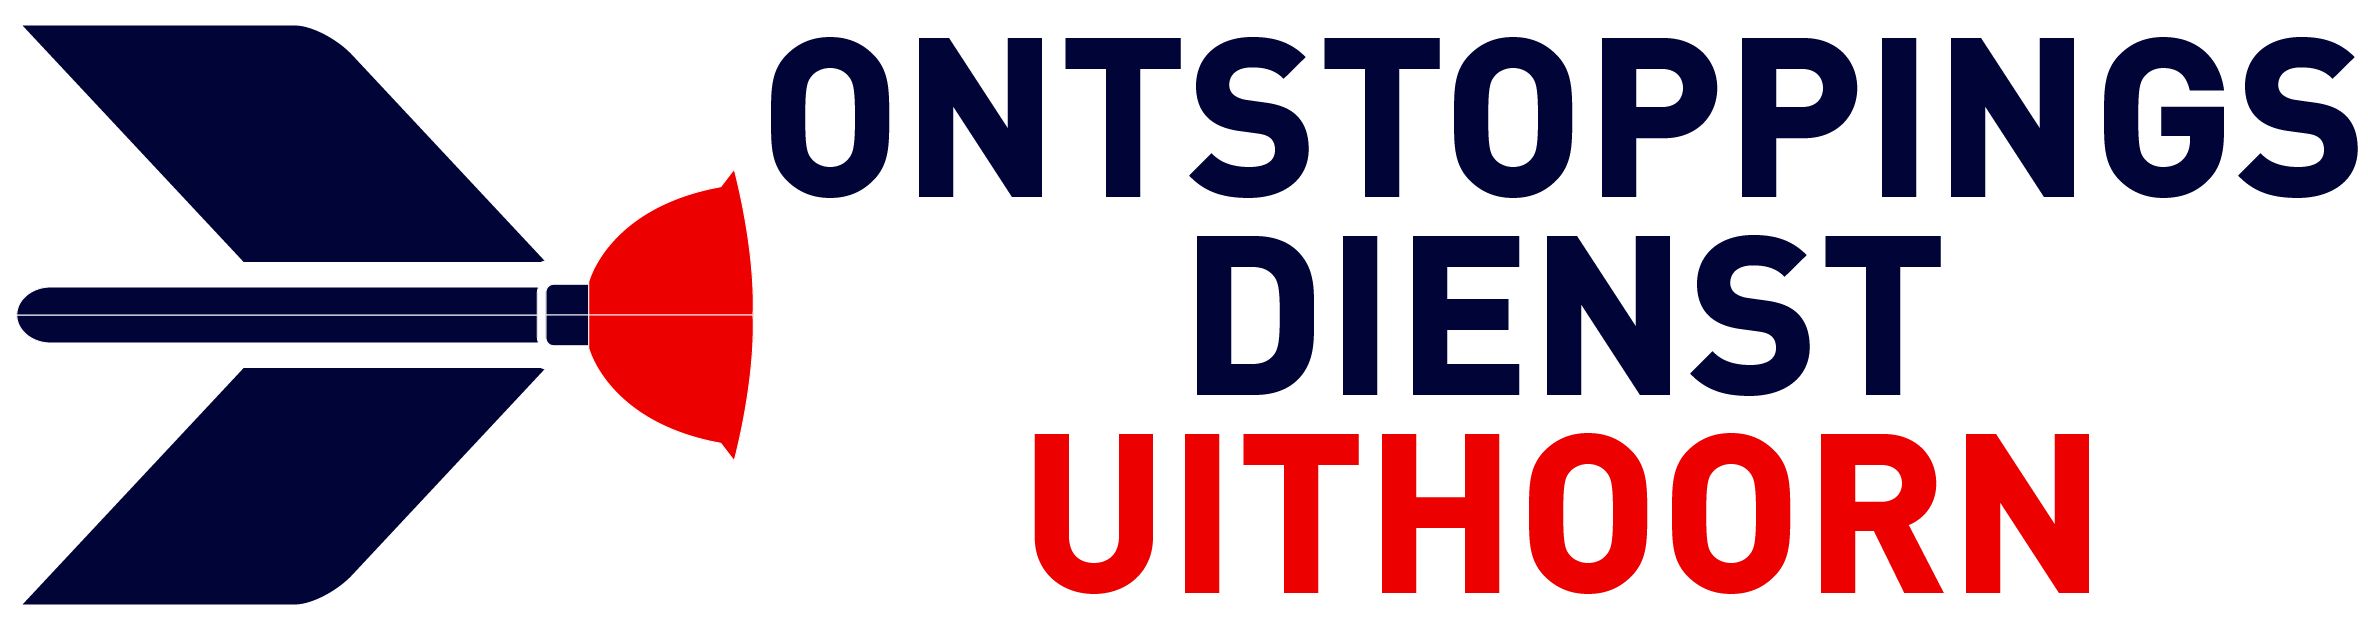 Ontstoppingsdienst Uithoorn logo